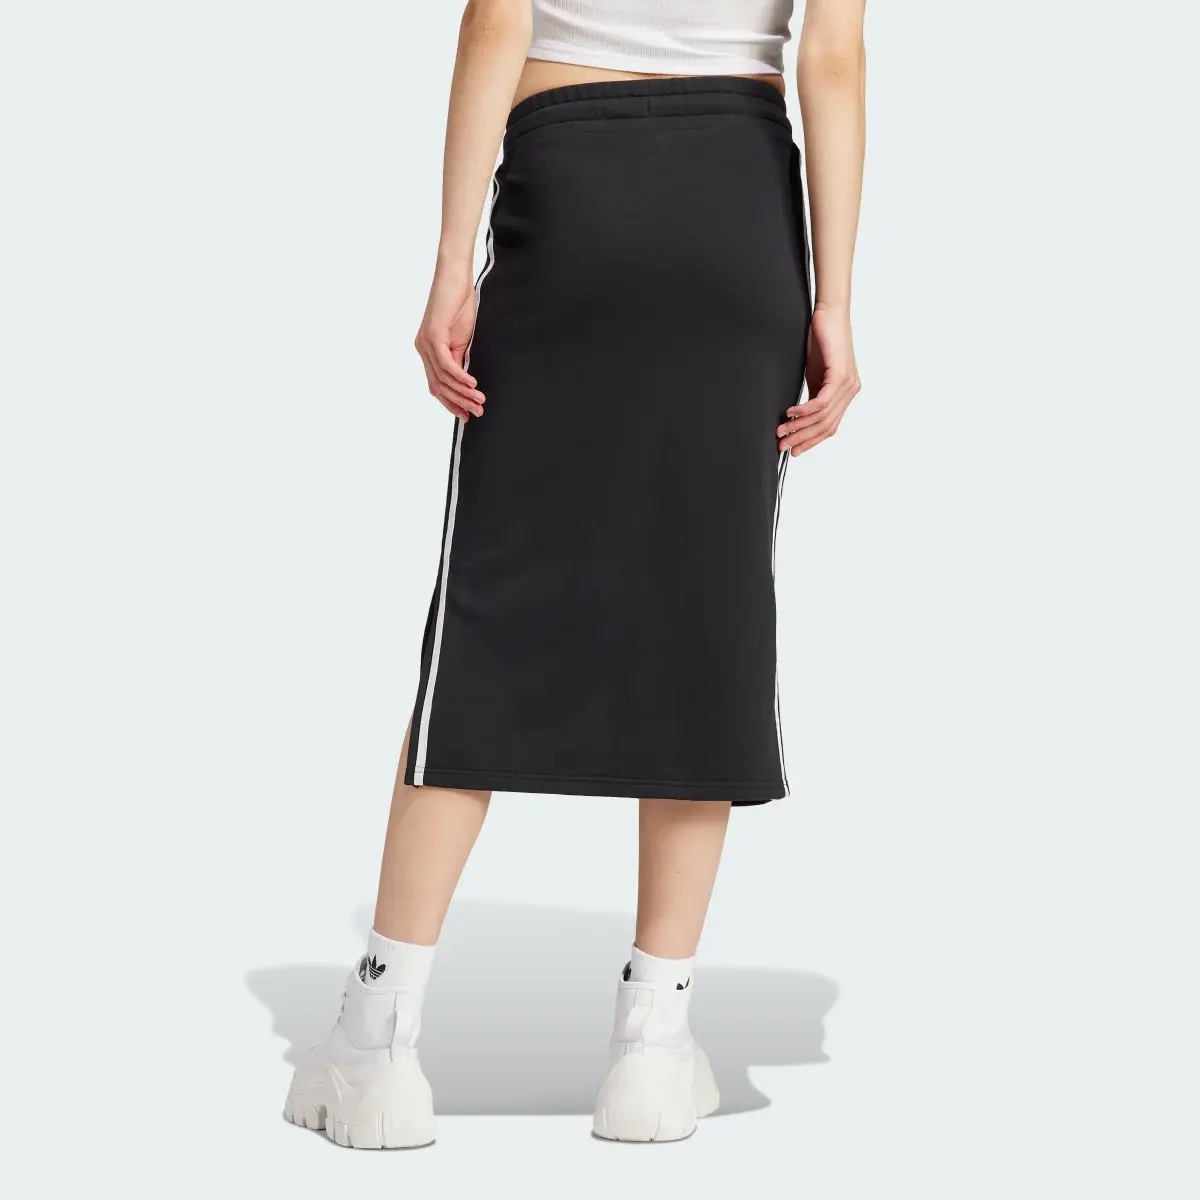 Adidas 3-Stripes Skirt. 2